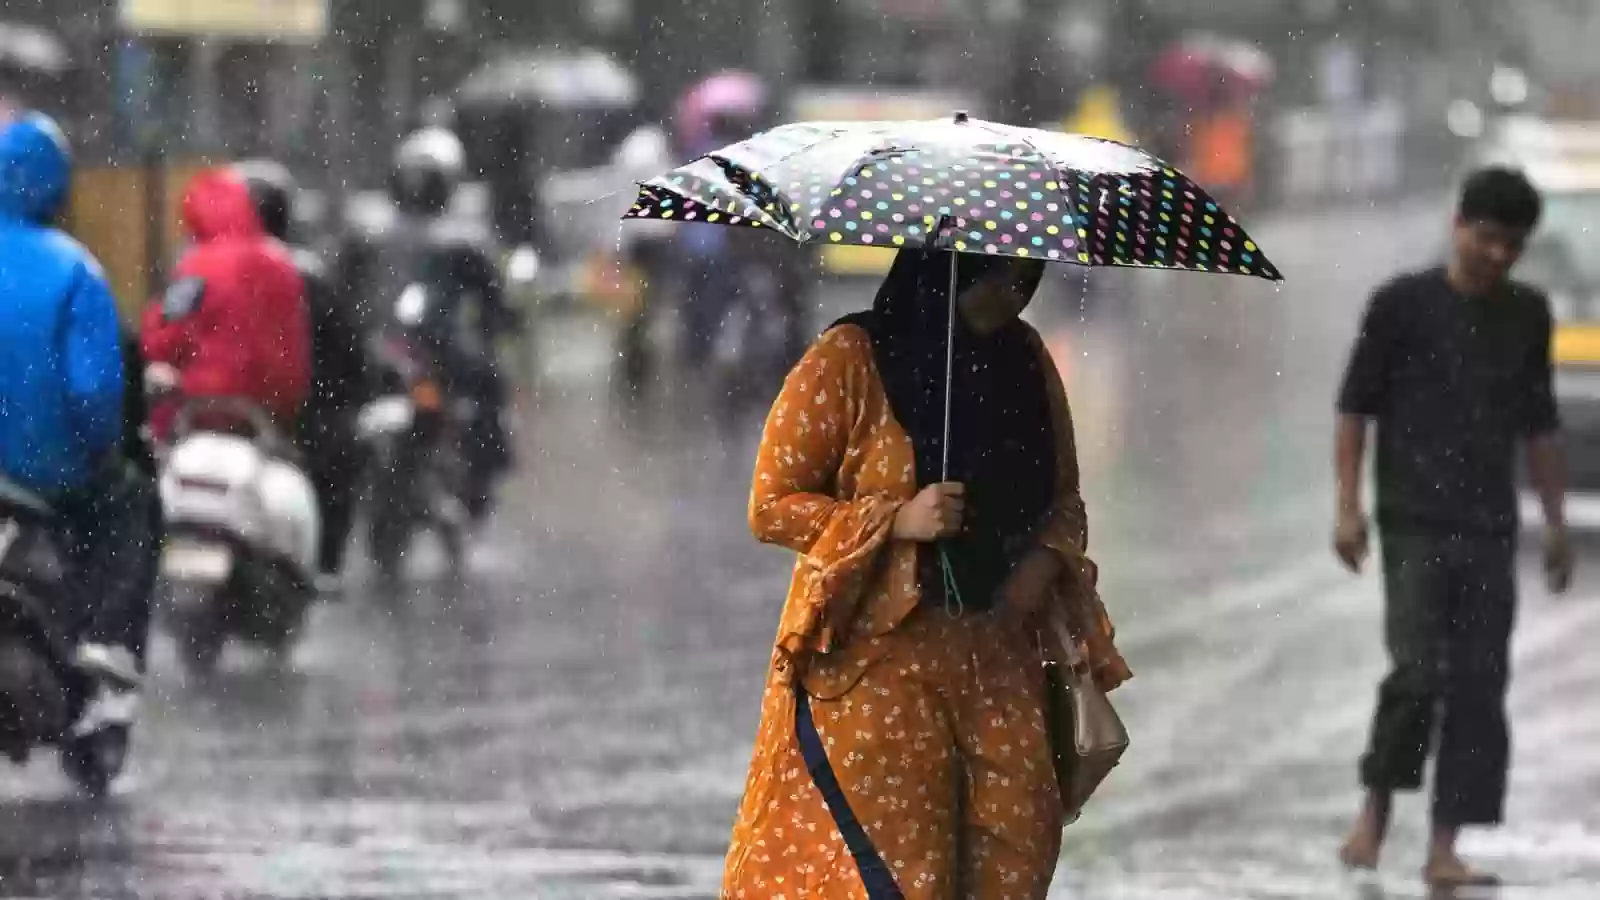 Bengaluru Rain Update: ಬೆಂಗಳೂರು ಸೇರಿದಂತೆ ವಿವಿಧ ಜಿಲ್ಲೆಗಳಲ್ಲಿ ಮೂರು ದಿನ ಮಳೆ ಸಾಧ್ಯತೆ - Kannada News Today